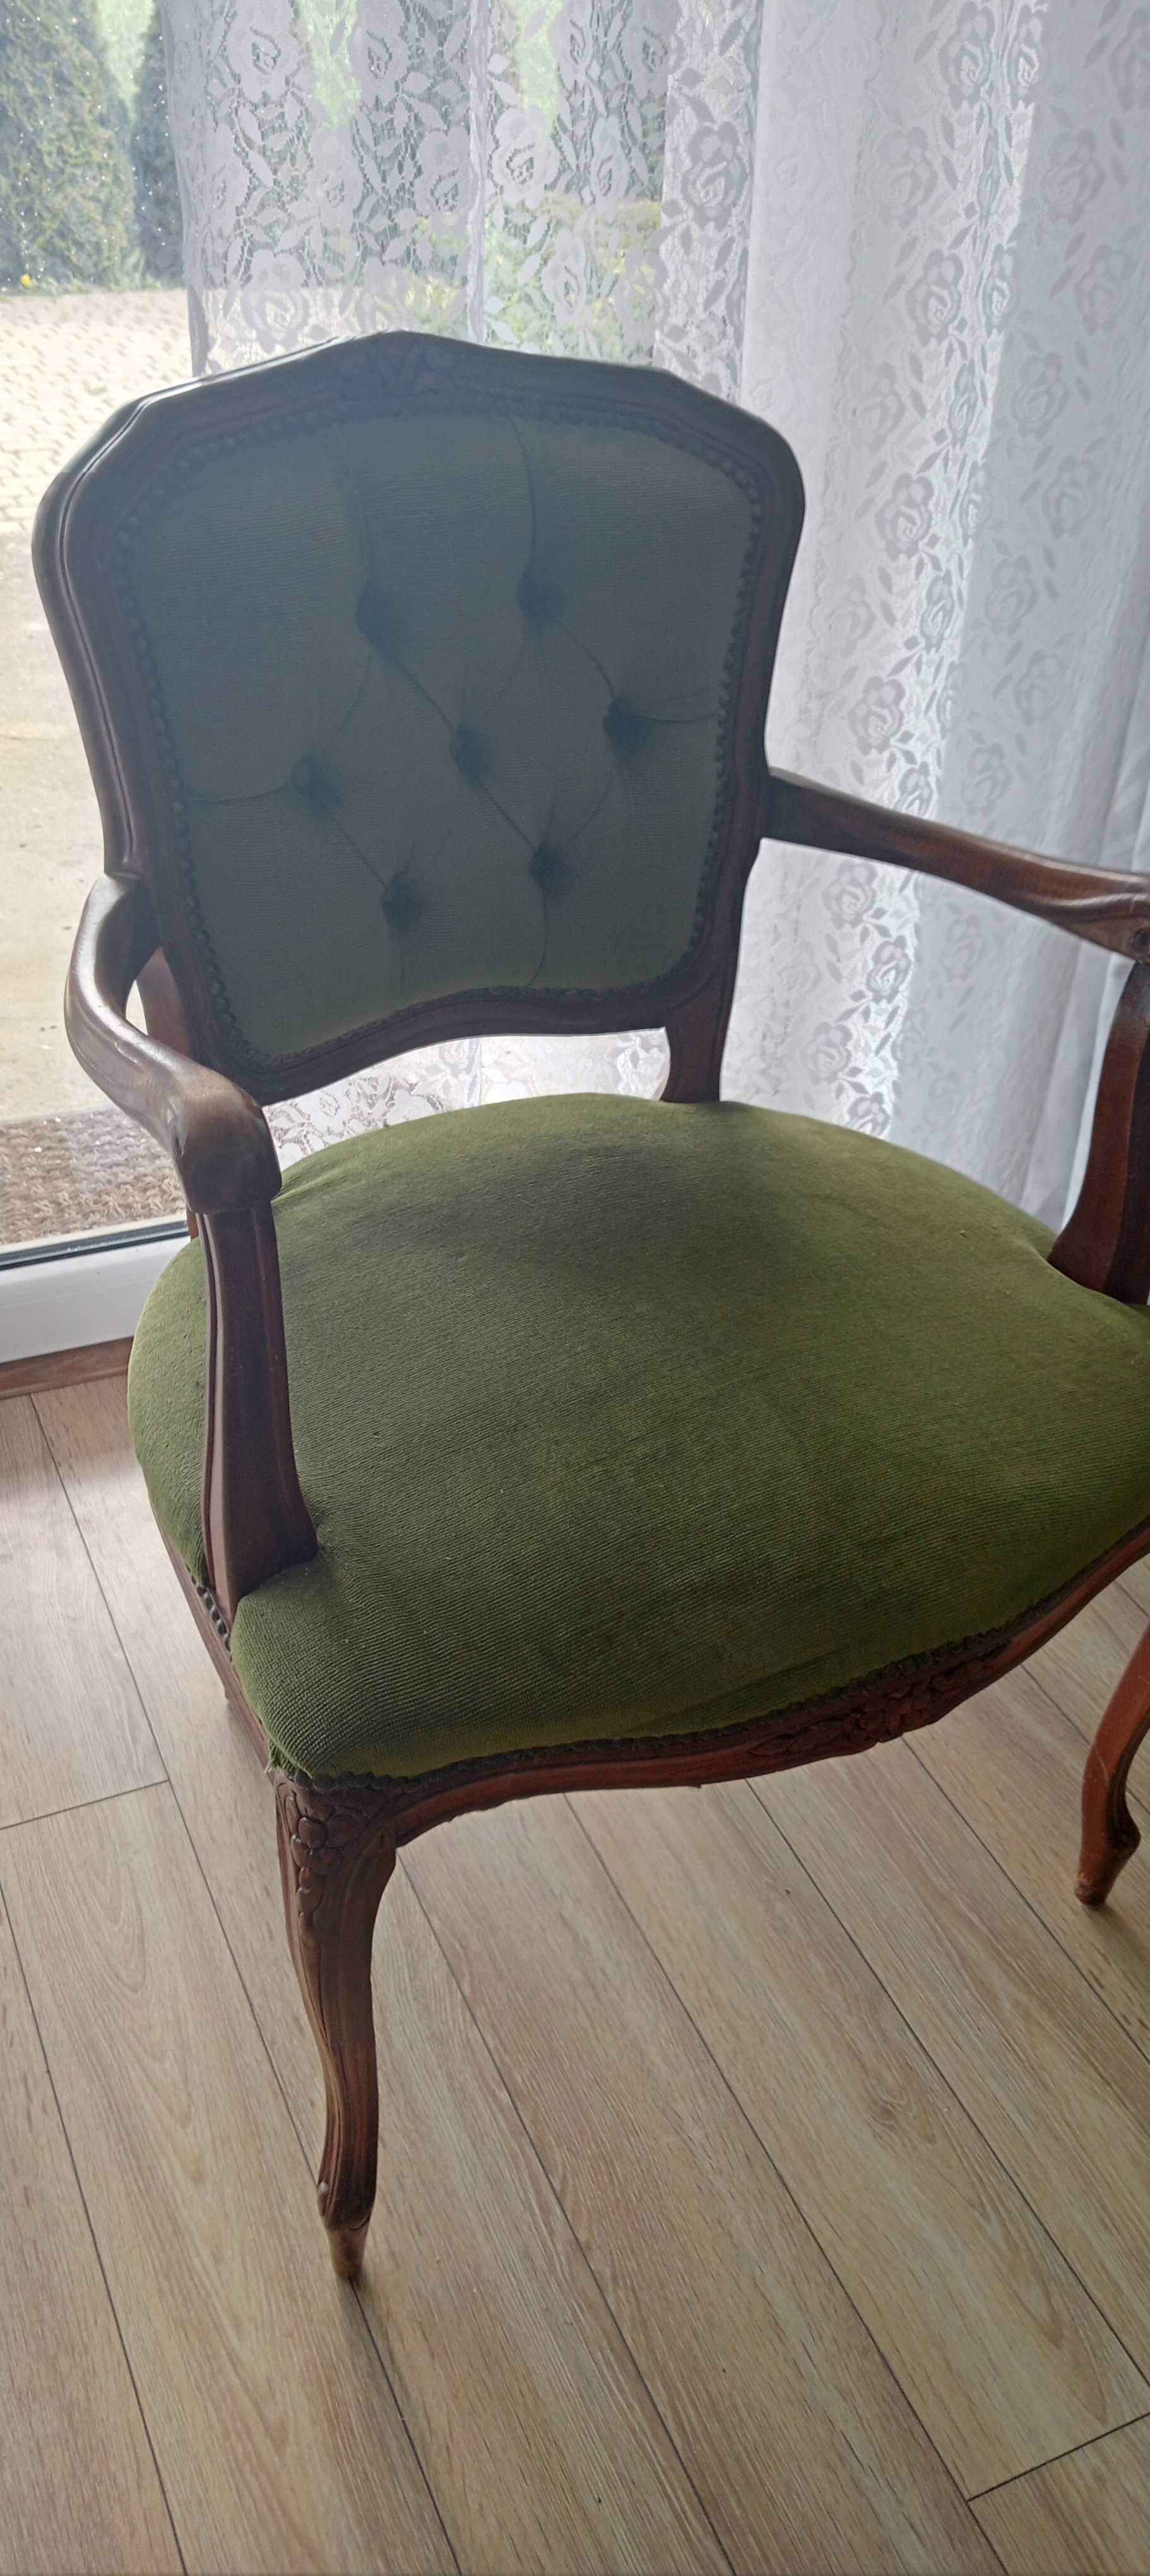 Fotel Ludwik, krzesło, kolor zielony